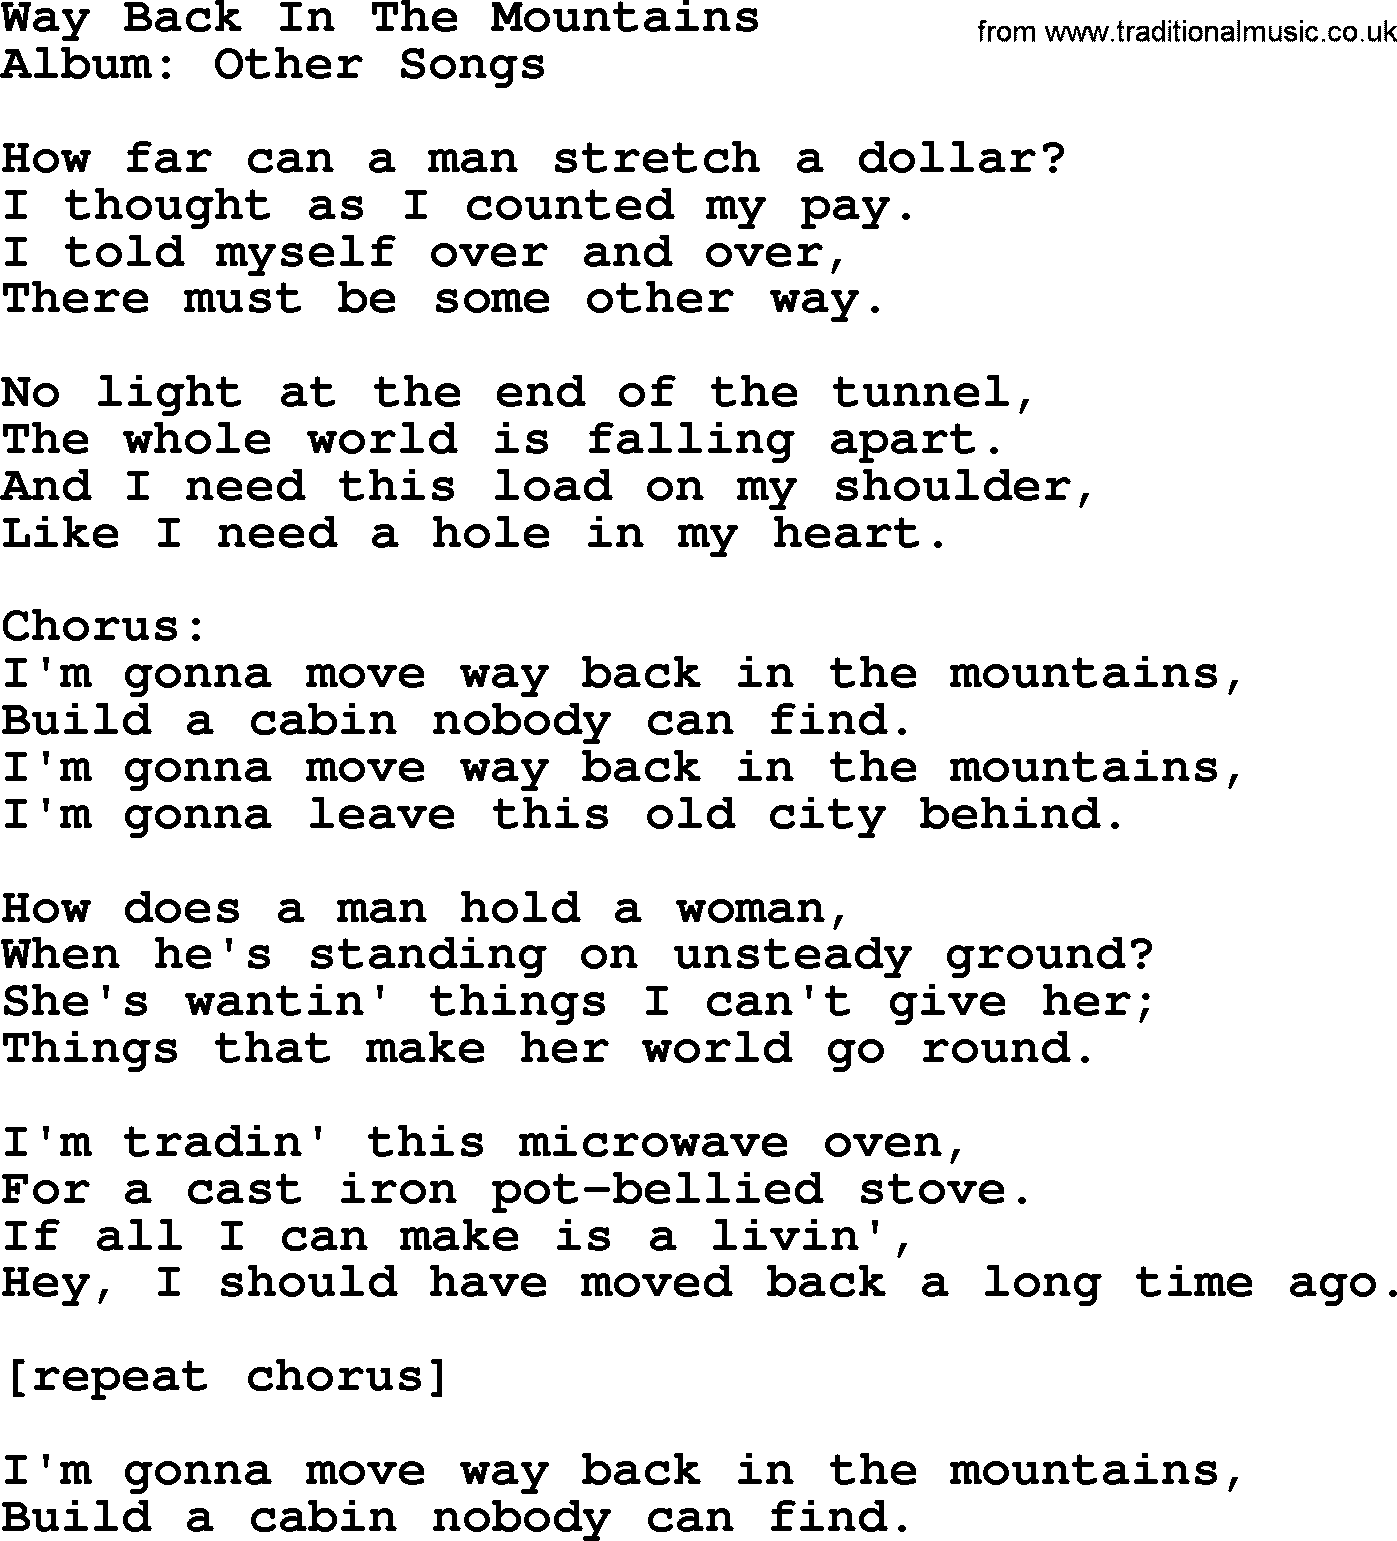 Merle Haggard song: Way Back In The Mountains, lyrics.